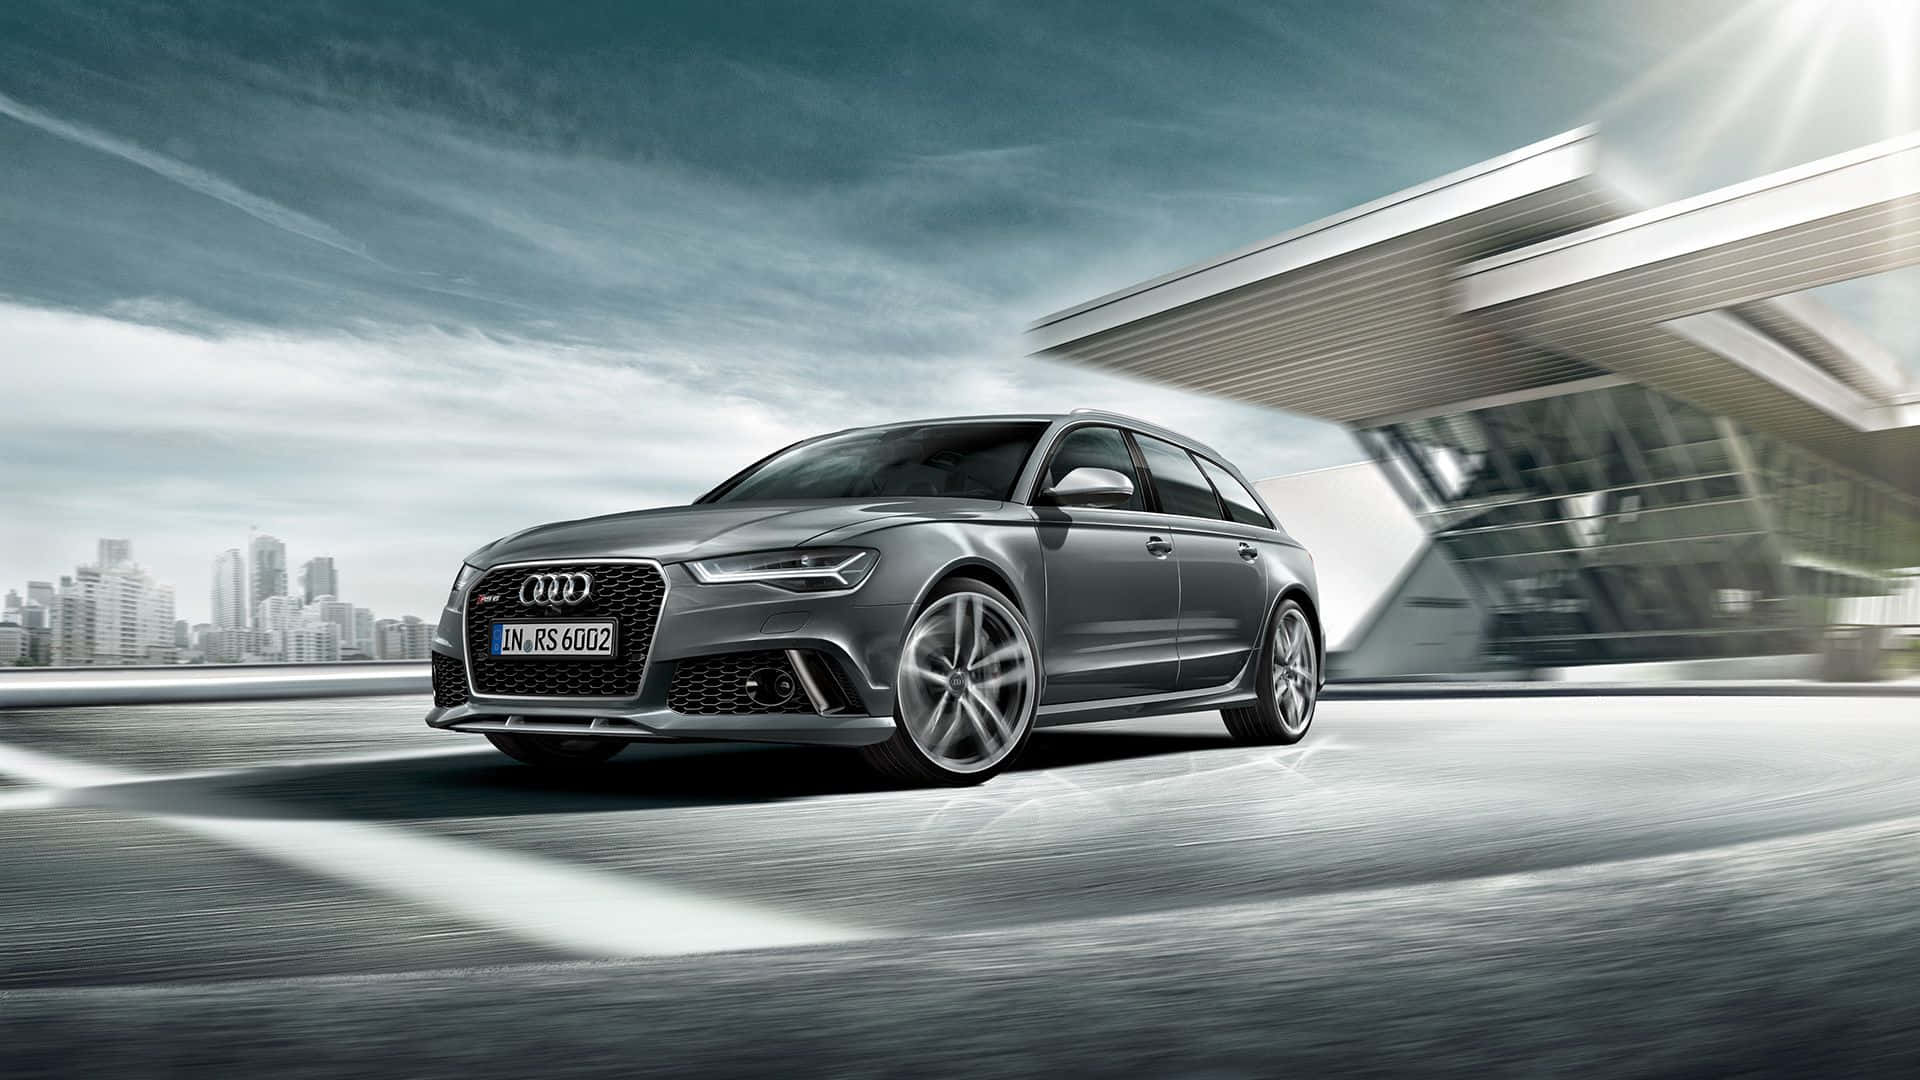 Caption: Sleek Audi RS6 in Motion Wallpaper